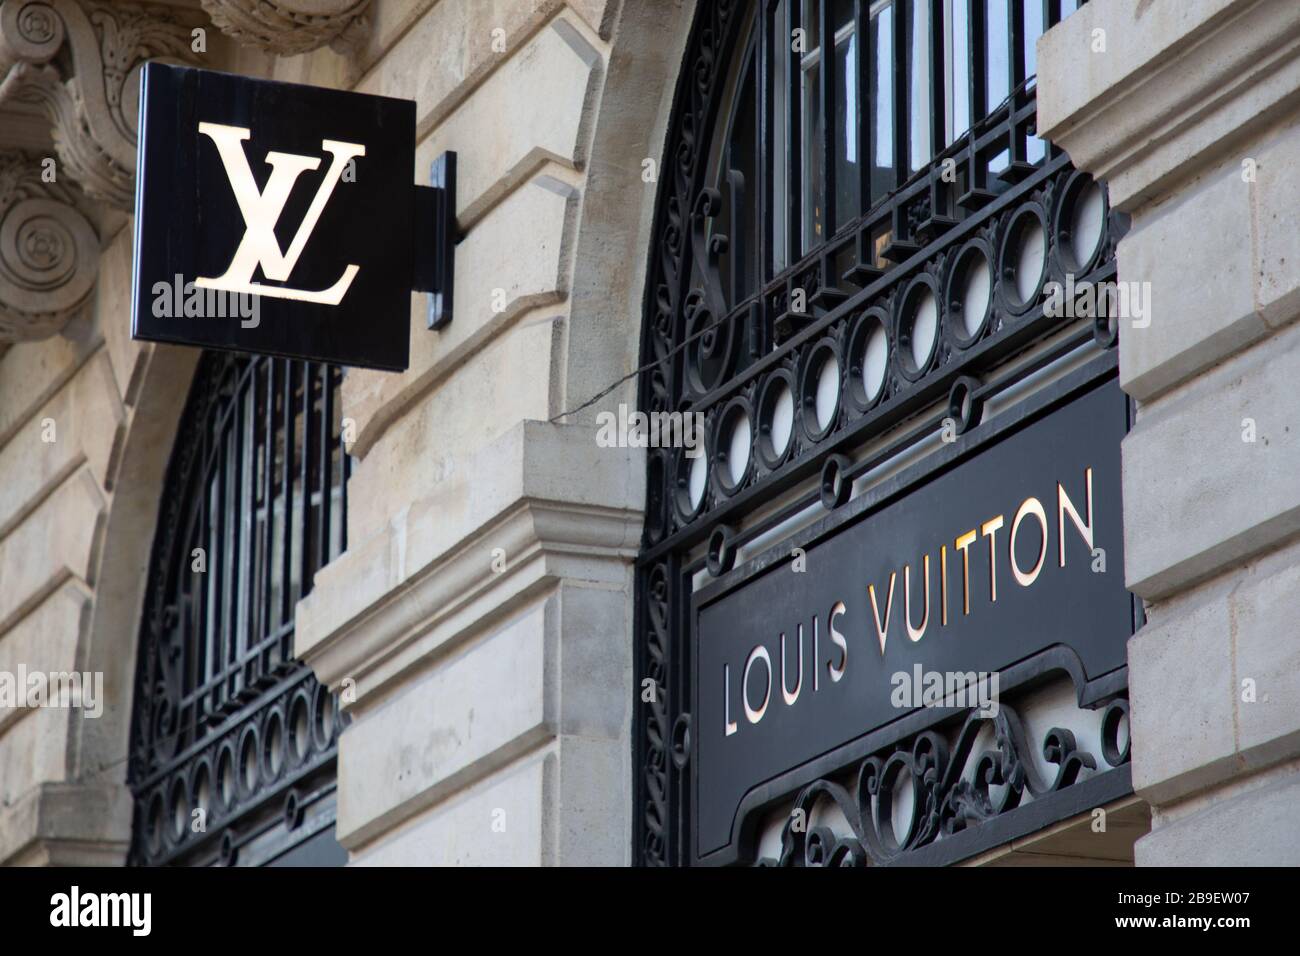 Bordeaux , Aquitaine / France - 11 25 2019 : Louis Vuitton logo store sign Luxury brand shop handbags luggage Stock Photo